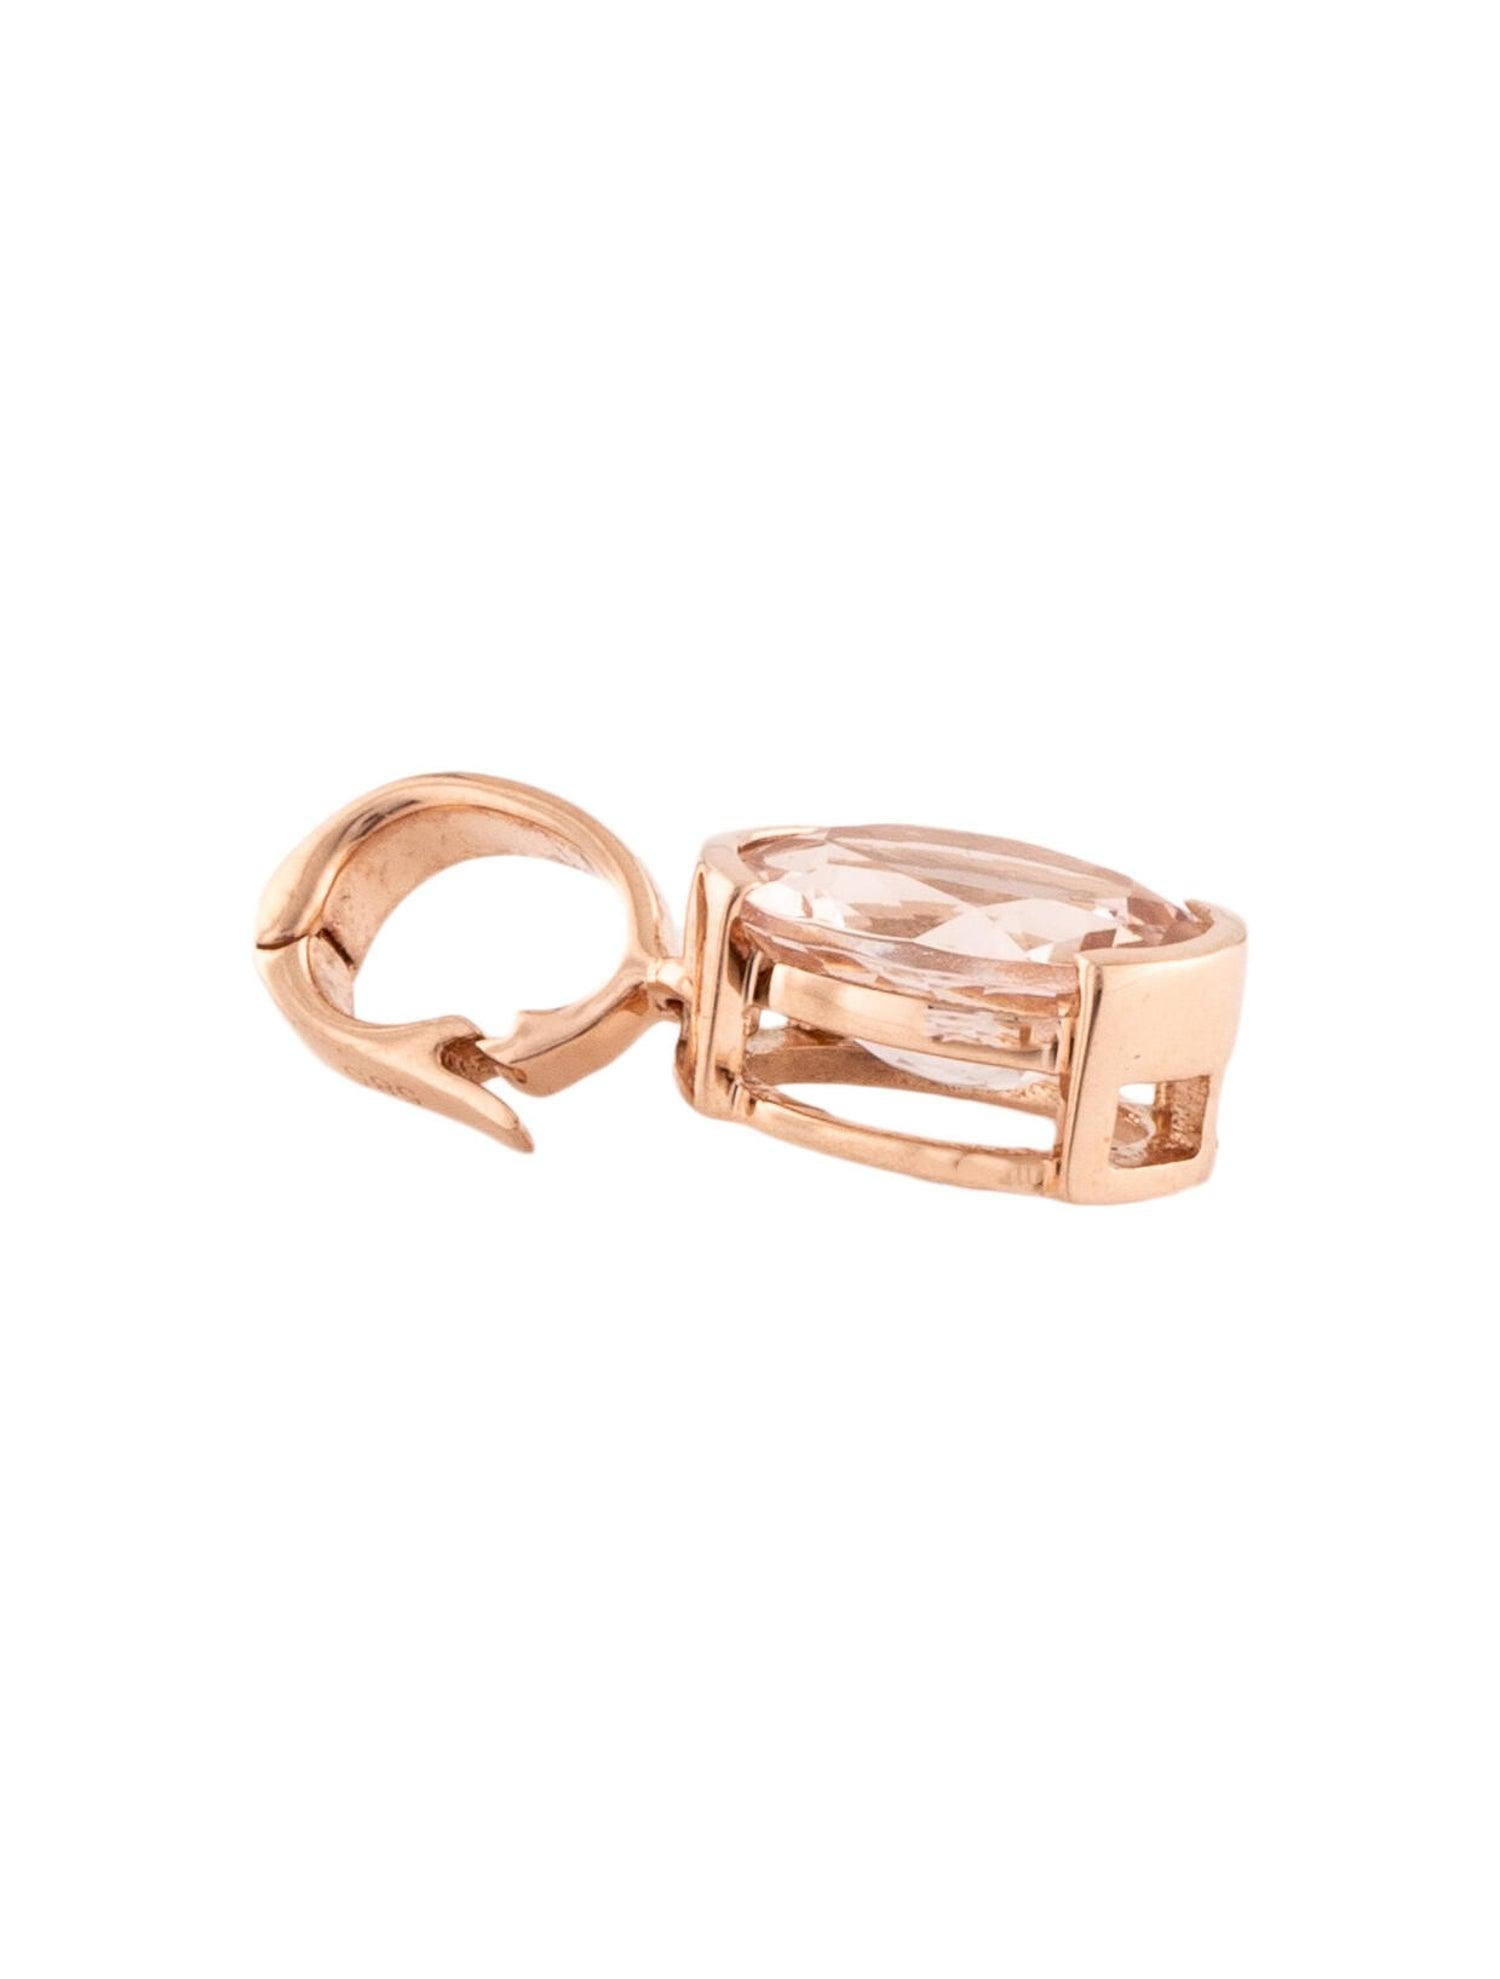 Women's Luxury 14K 2.50ctw Morganite Pendant - Exquisite Gemstone Statement in Rose Gold For Sale